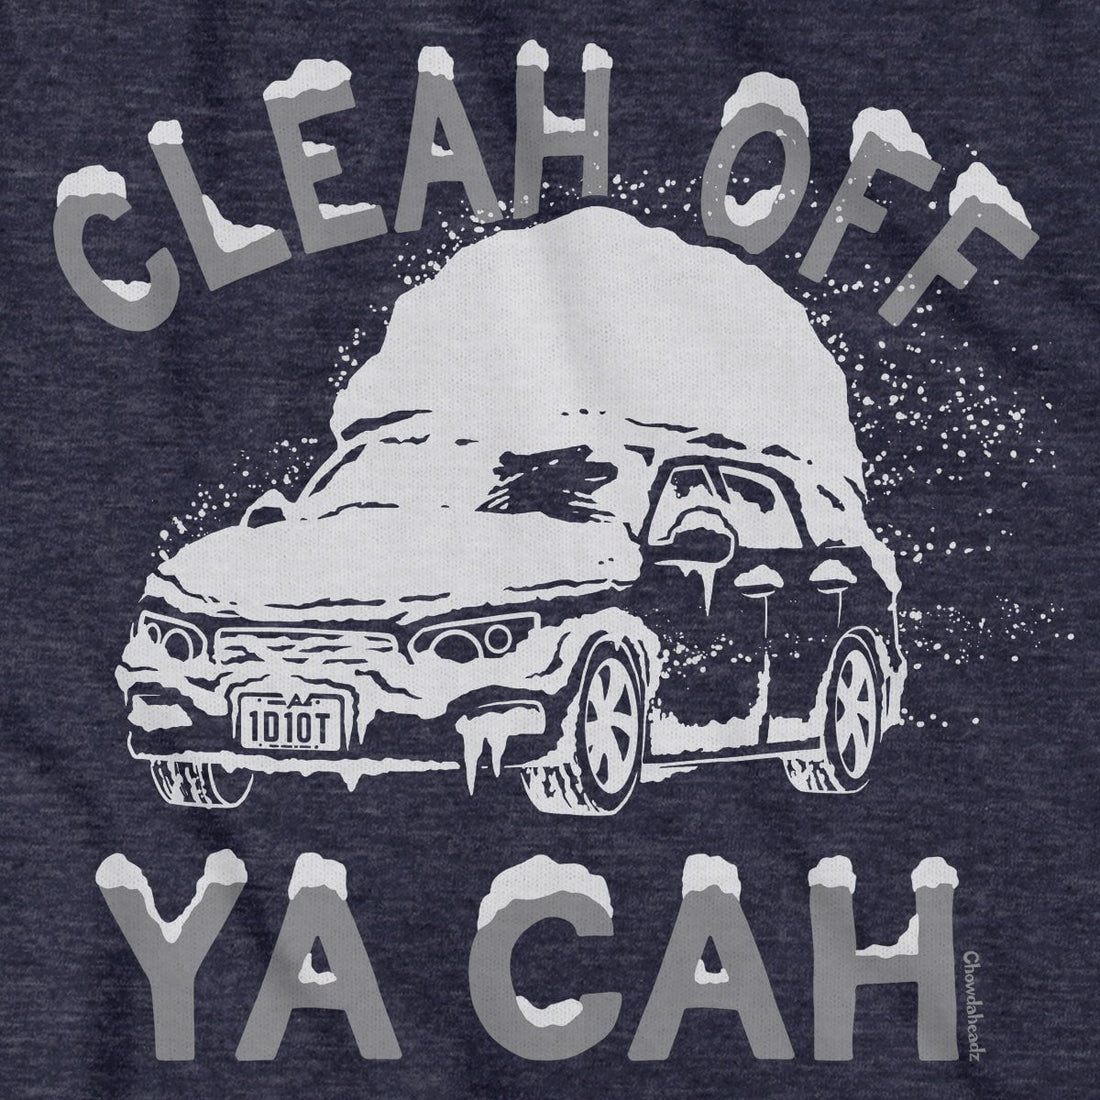 Cleah Off Ya Cah T-Shirt - Chowdaheadz